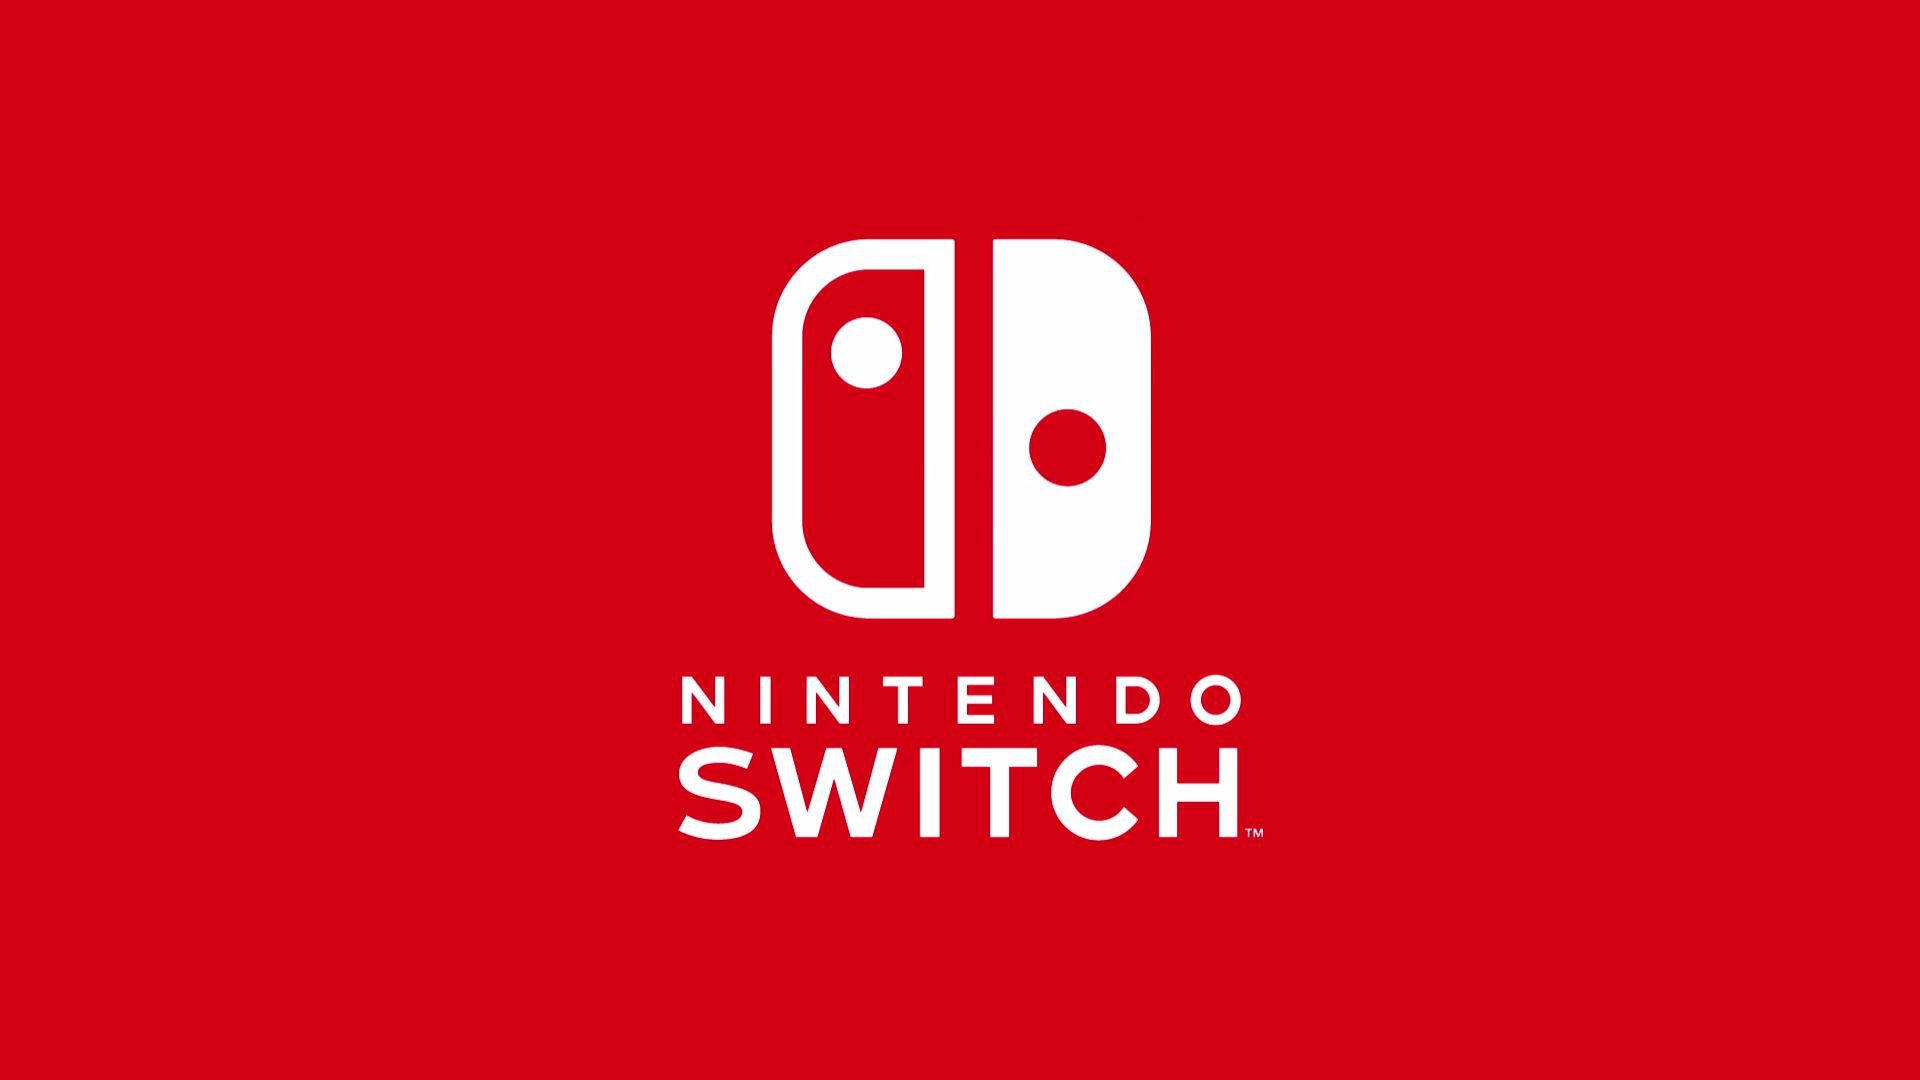 Nintendo Switch Logo Plain Red Backdrop Wallpaper